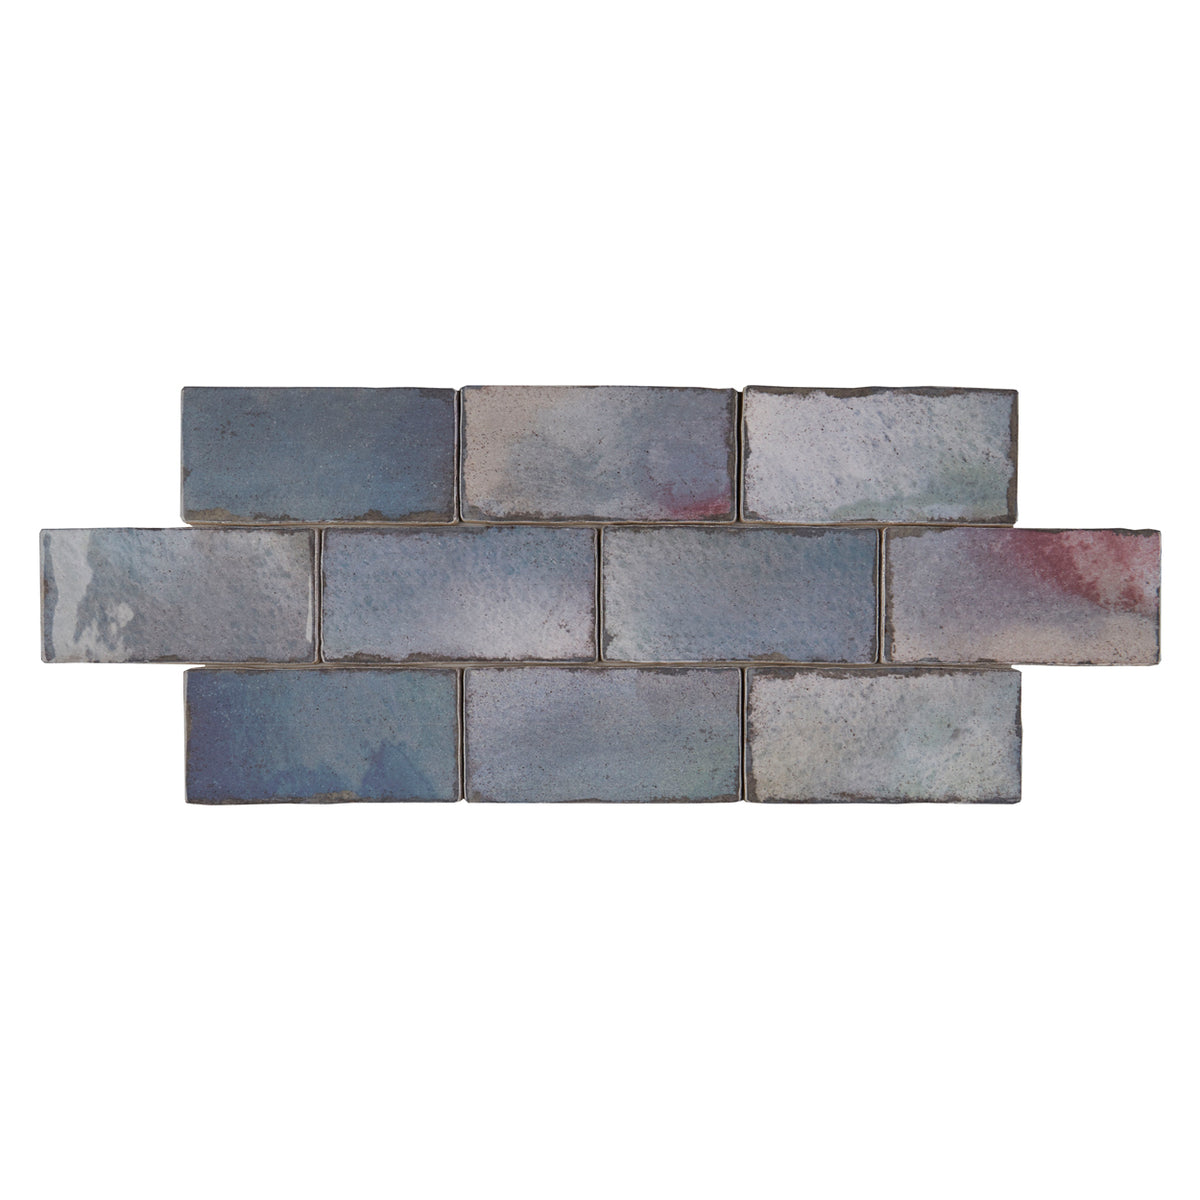 Lungarno Ceramics - Retrospectives 3 in. x 6 in. Ceramic Tile - Royal Garden Installed 2